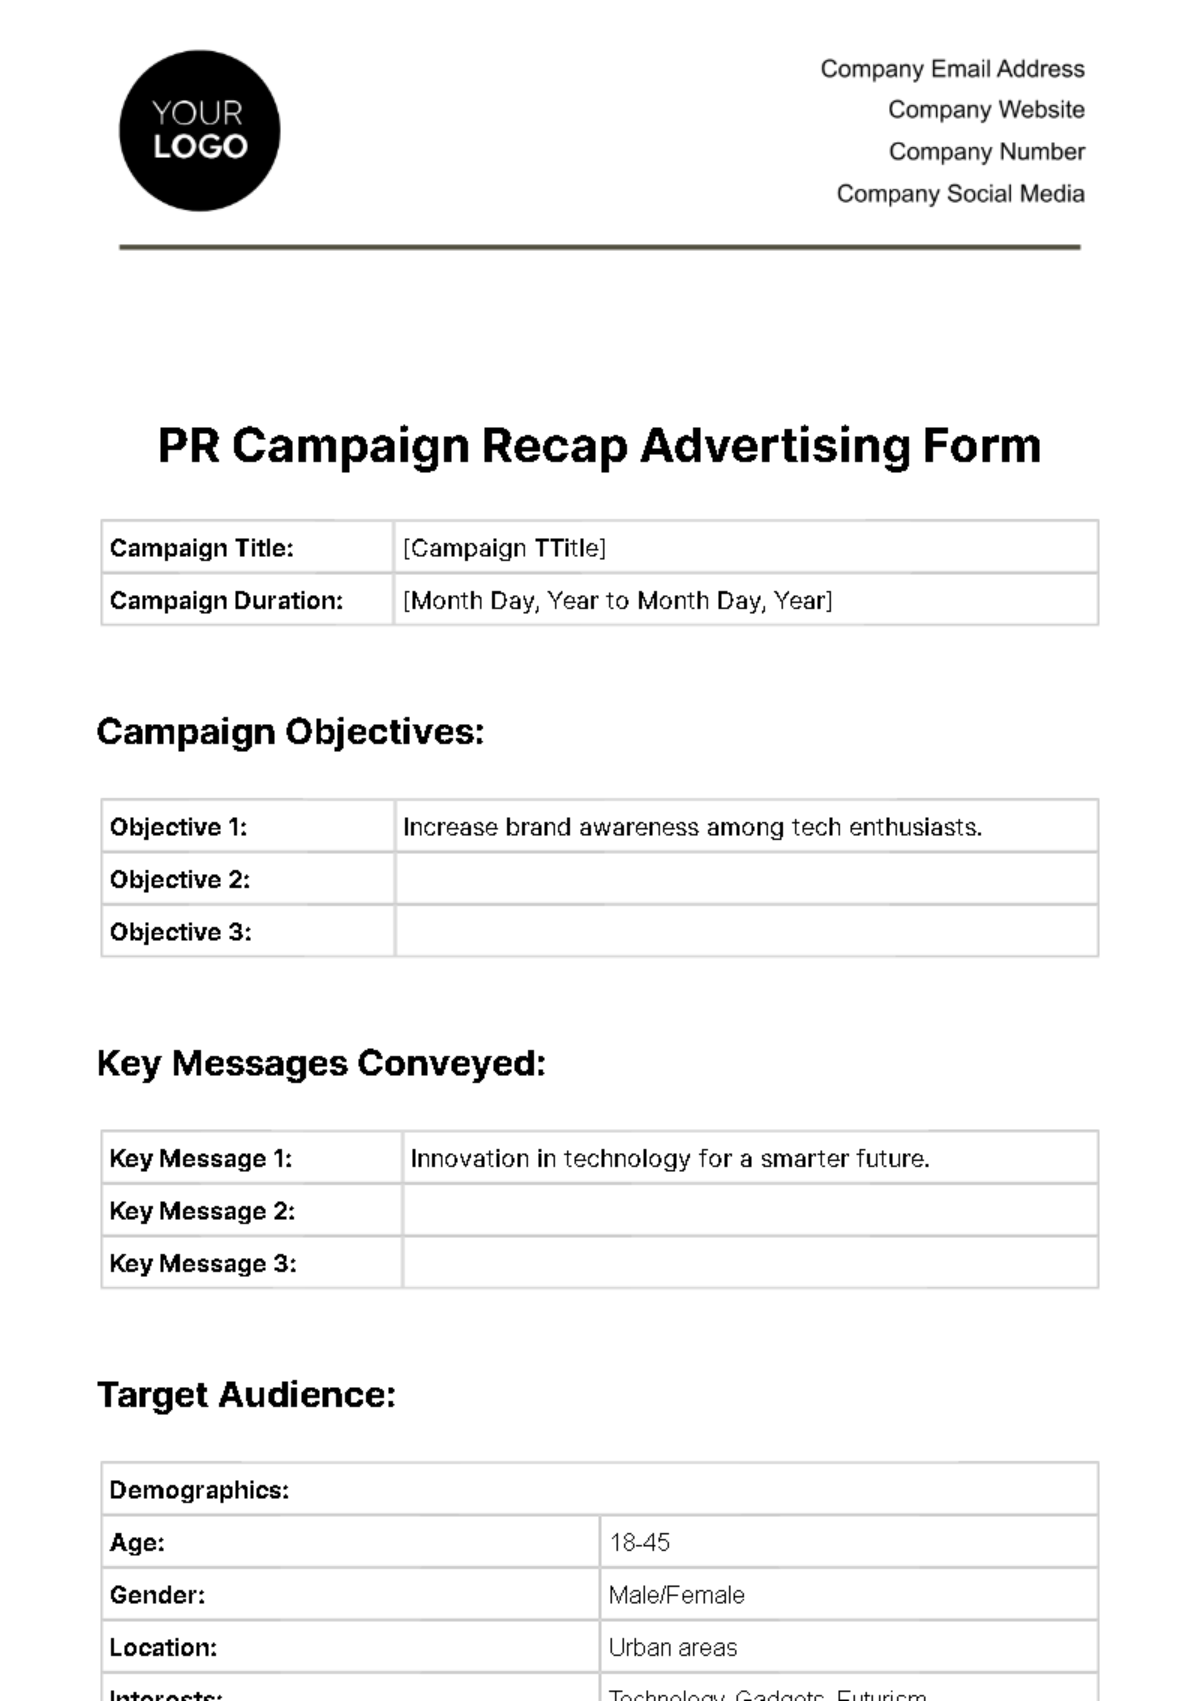 PR Campaign Recap Advertising Form Template